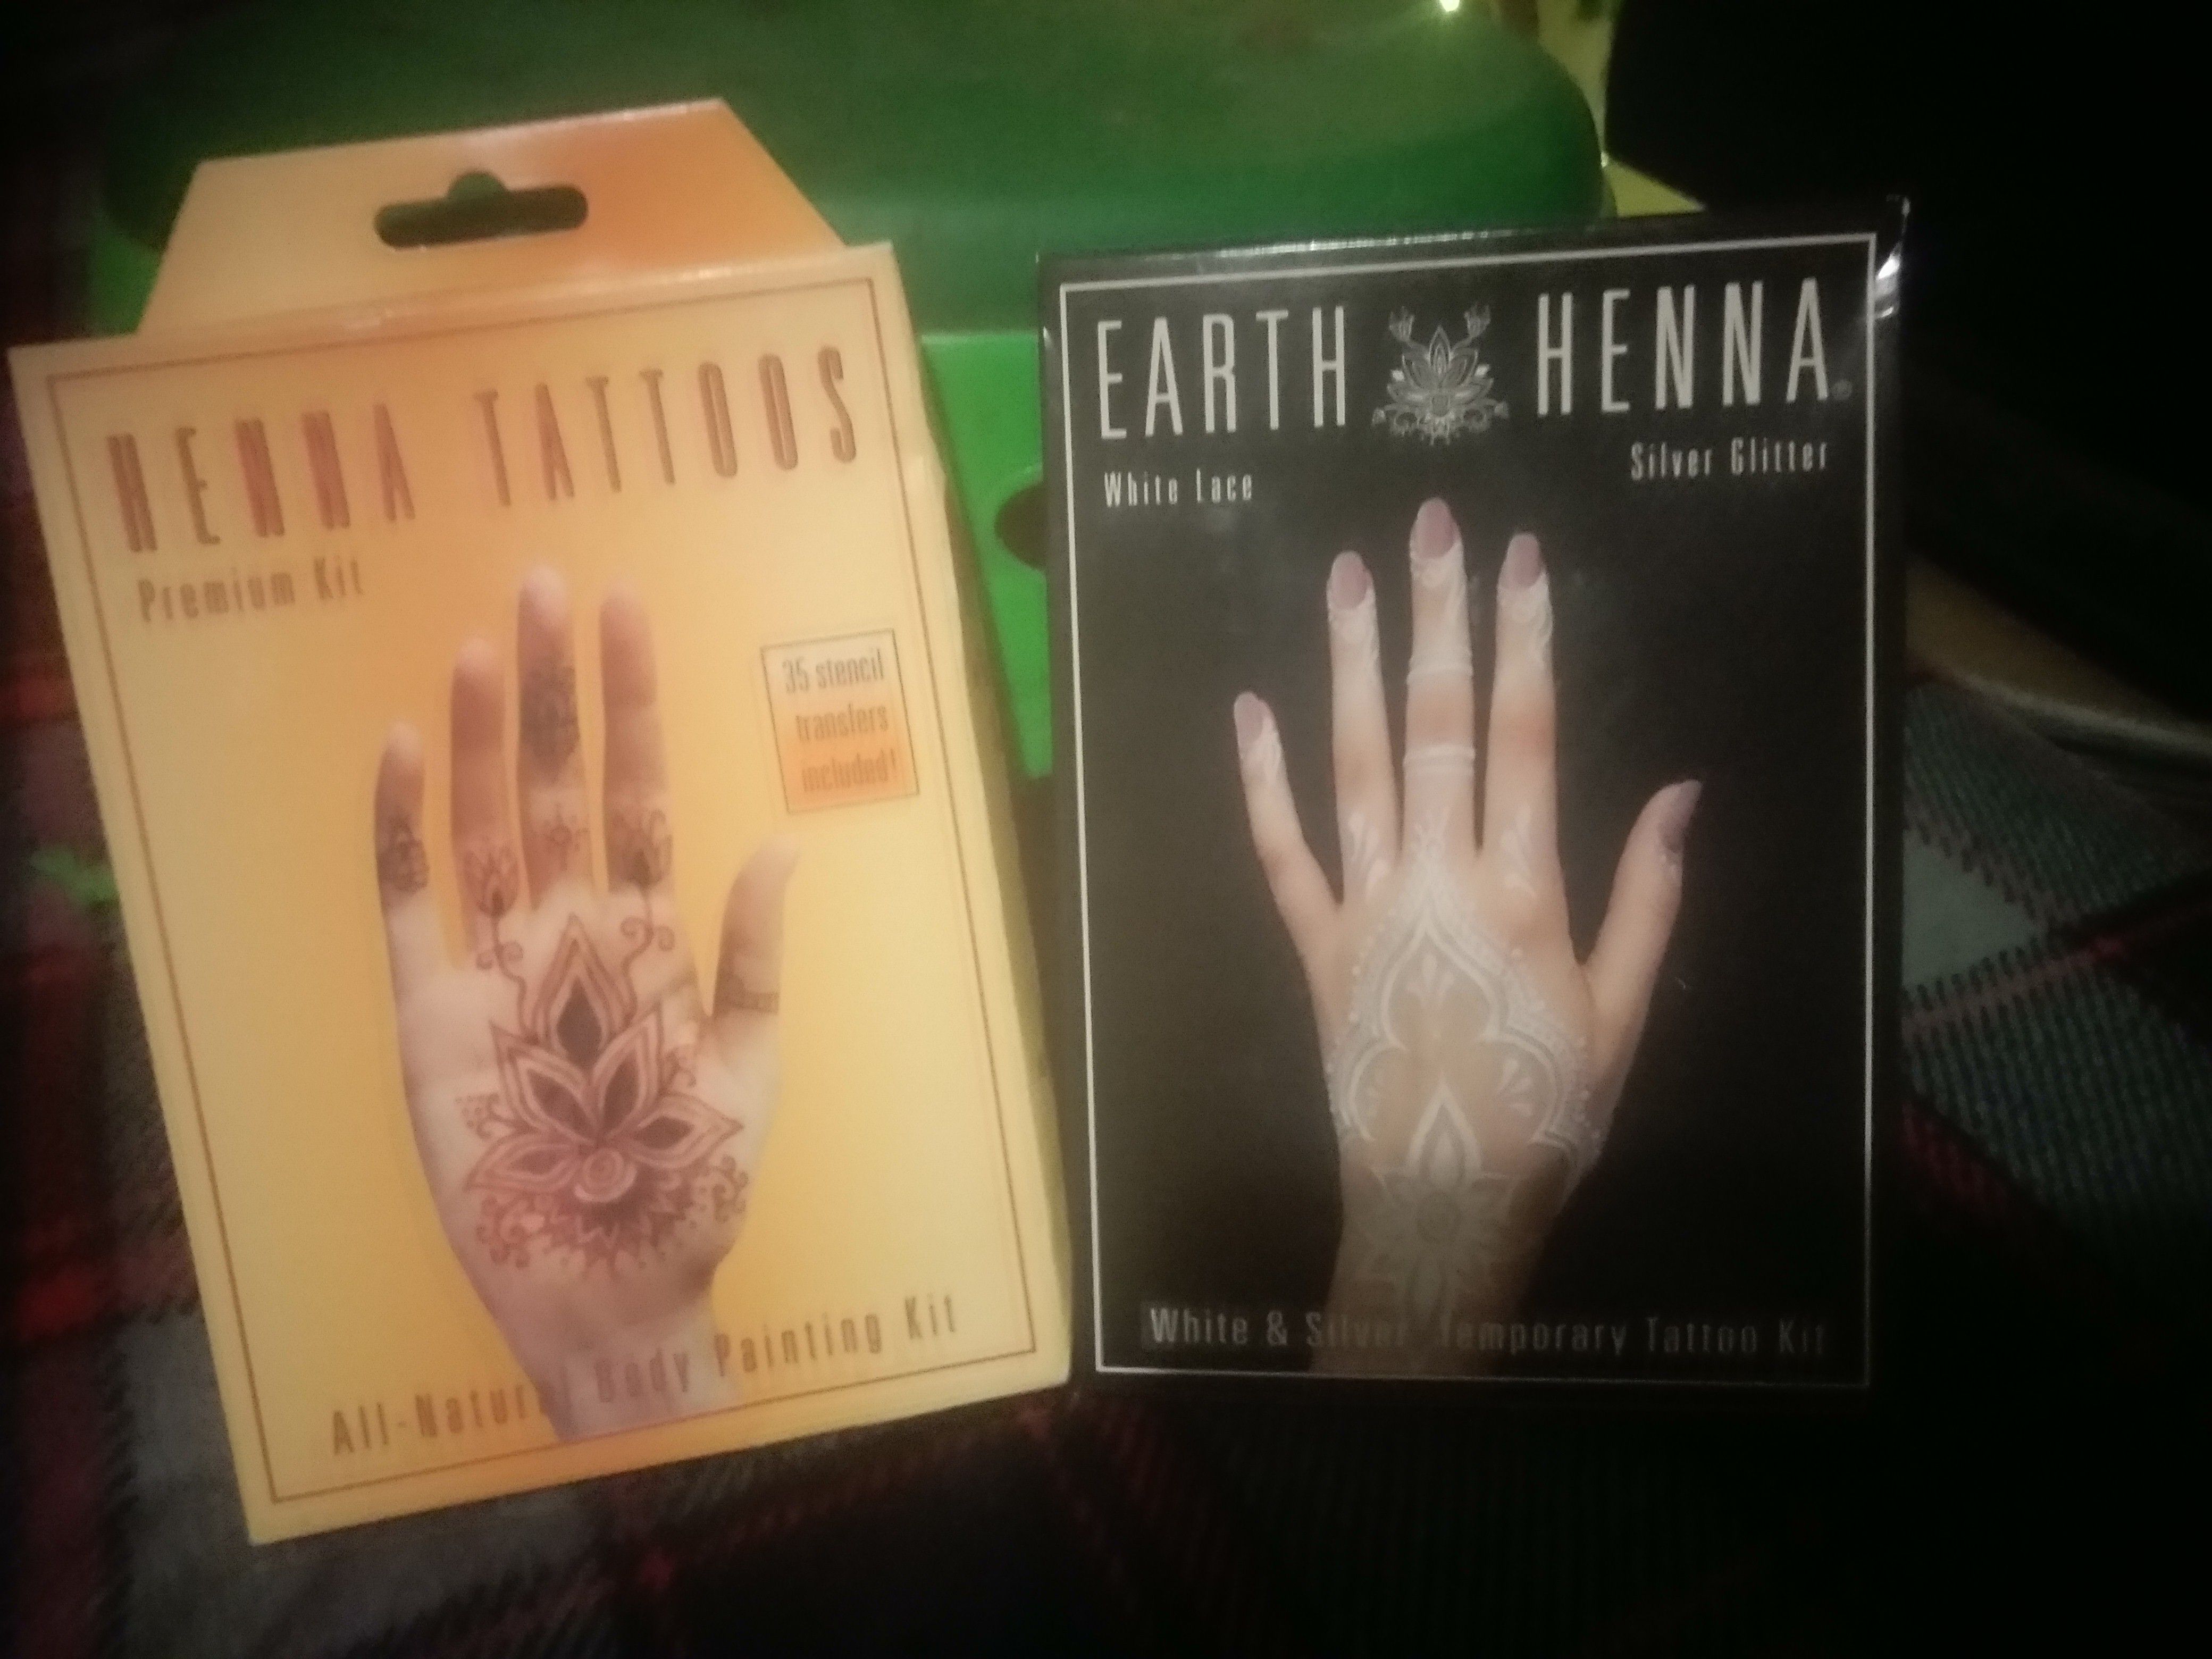 Henna Tattoos All Natural Body Painting Kits